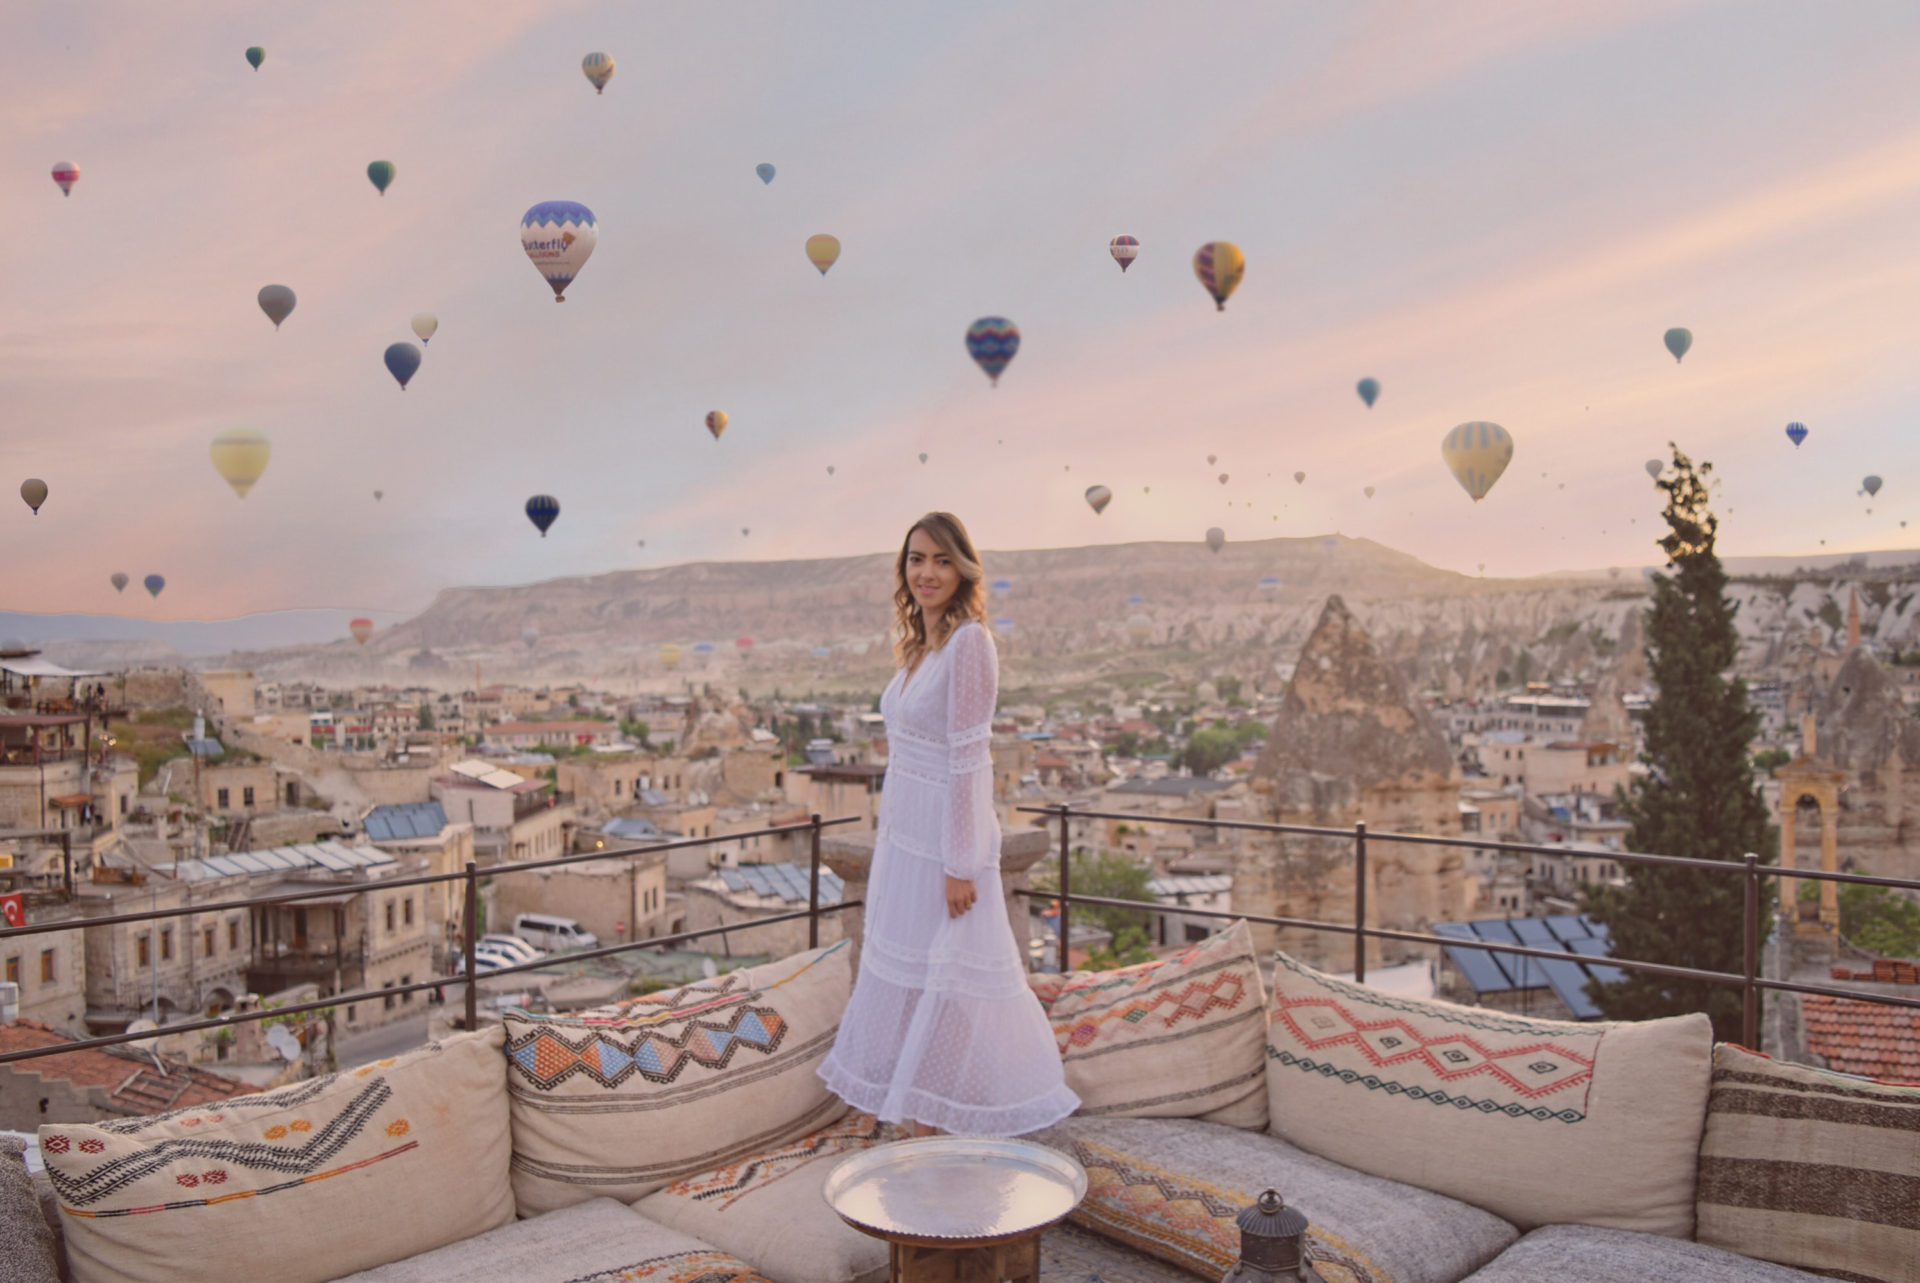 Cappadocia: Hot Air Balloons and Cave Hotels